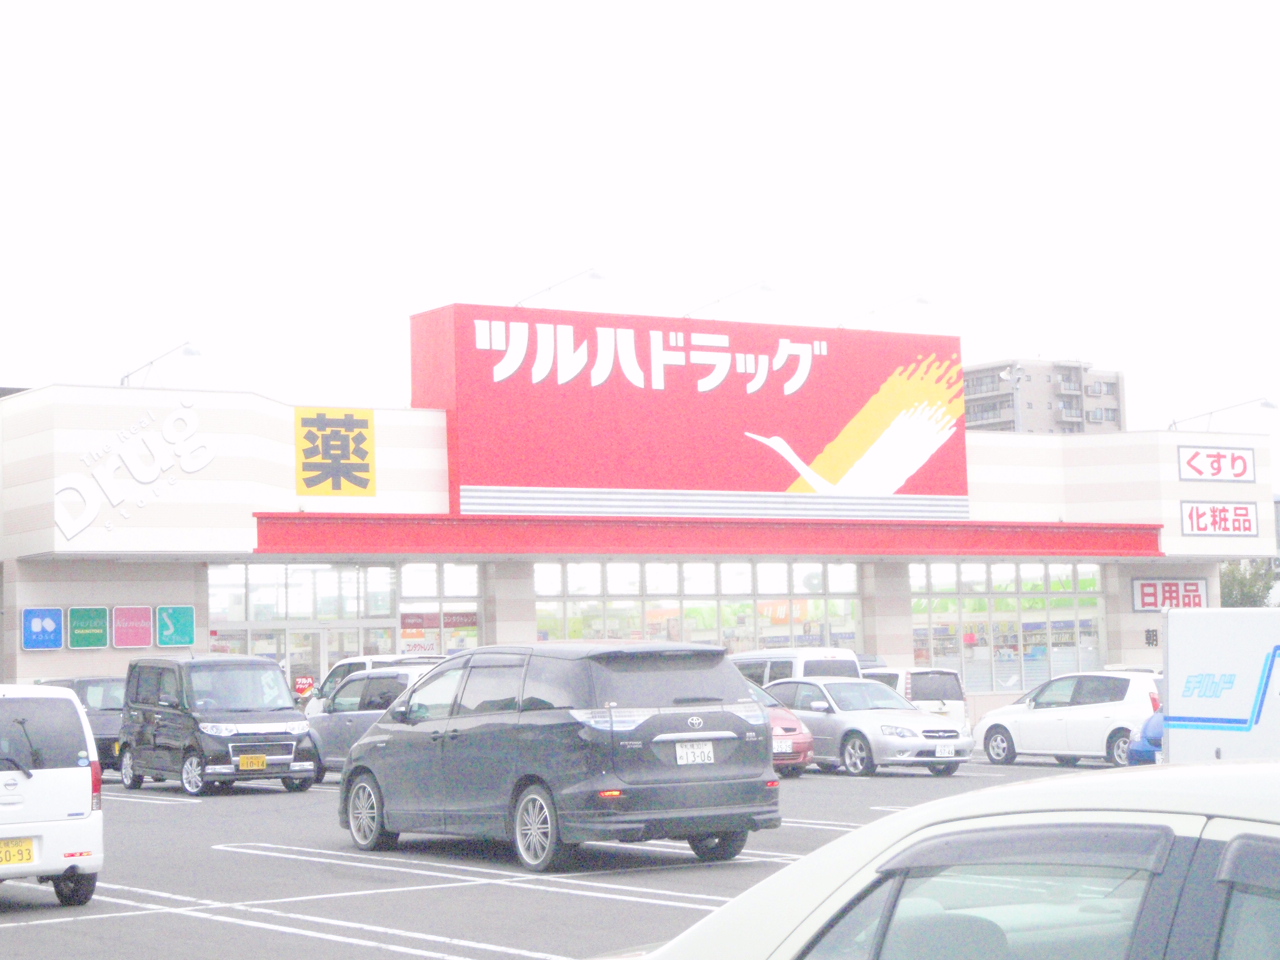 Dorakkusutoa. Tsuruha drag Asari shop 1173m until (drugstore)